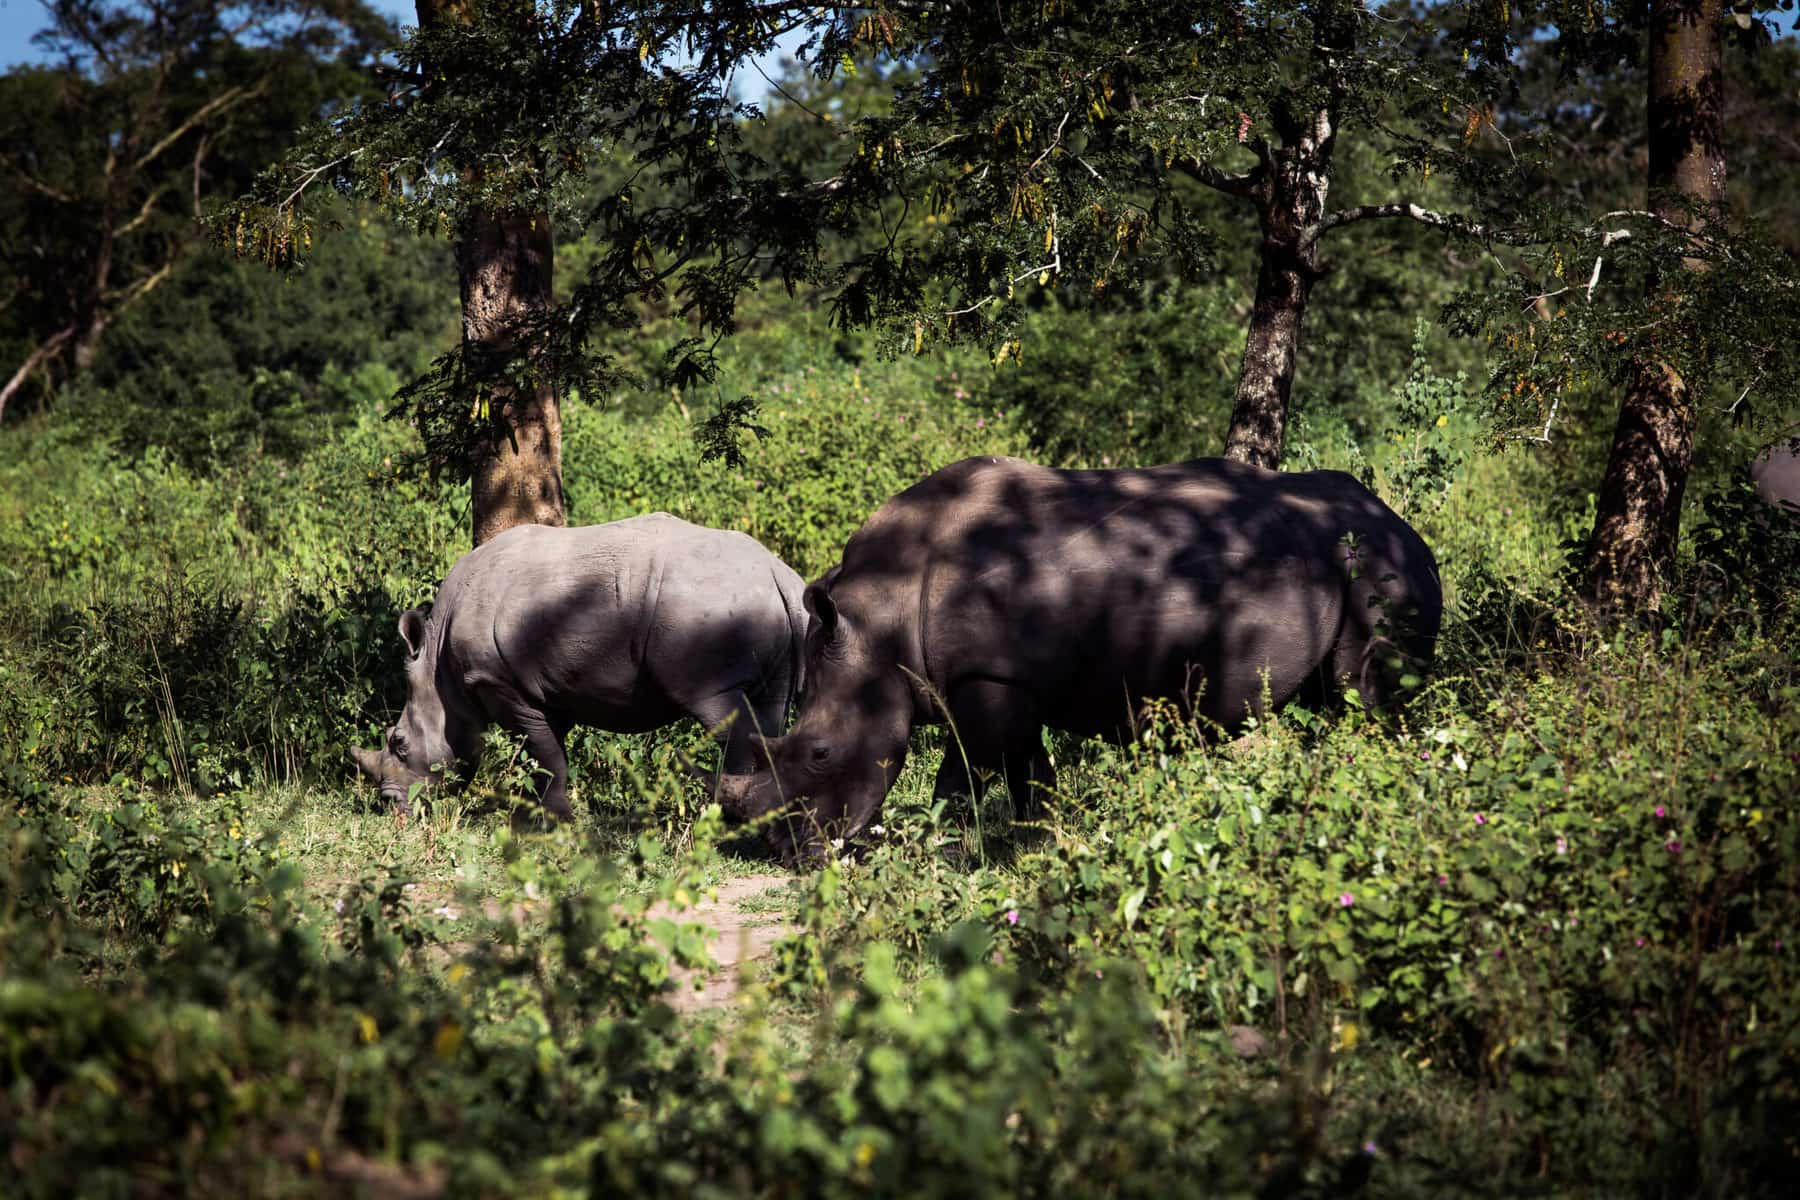 Two rhinos grazing on fresh grass in Uganda's Ziwa Rhino Sanctuary